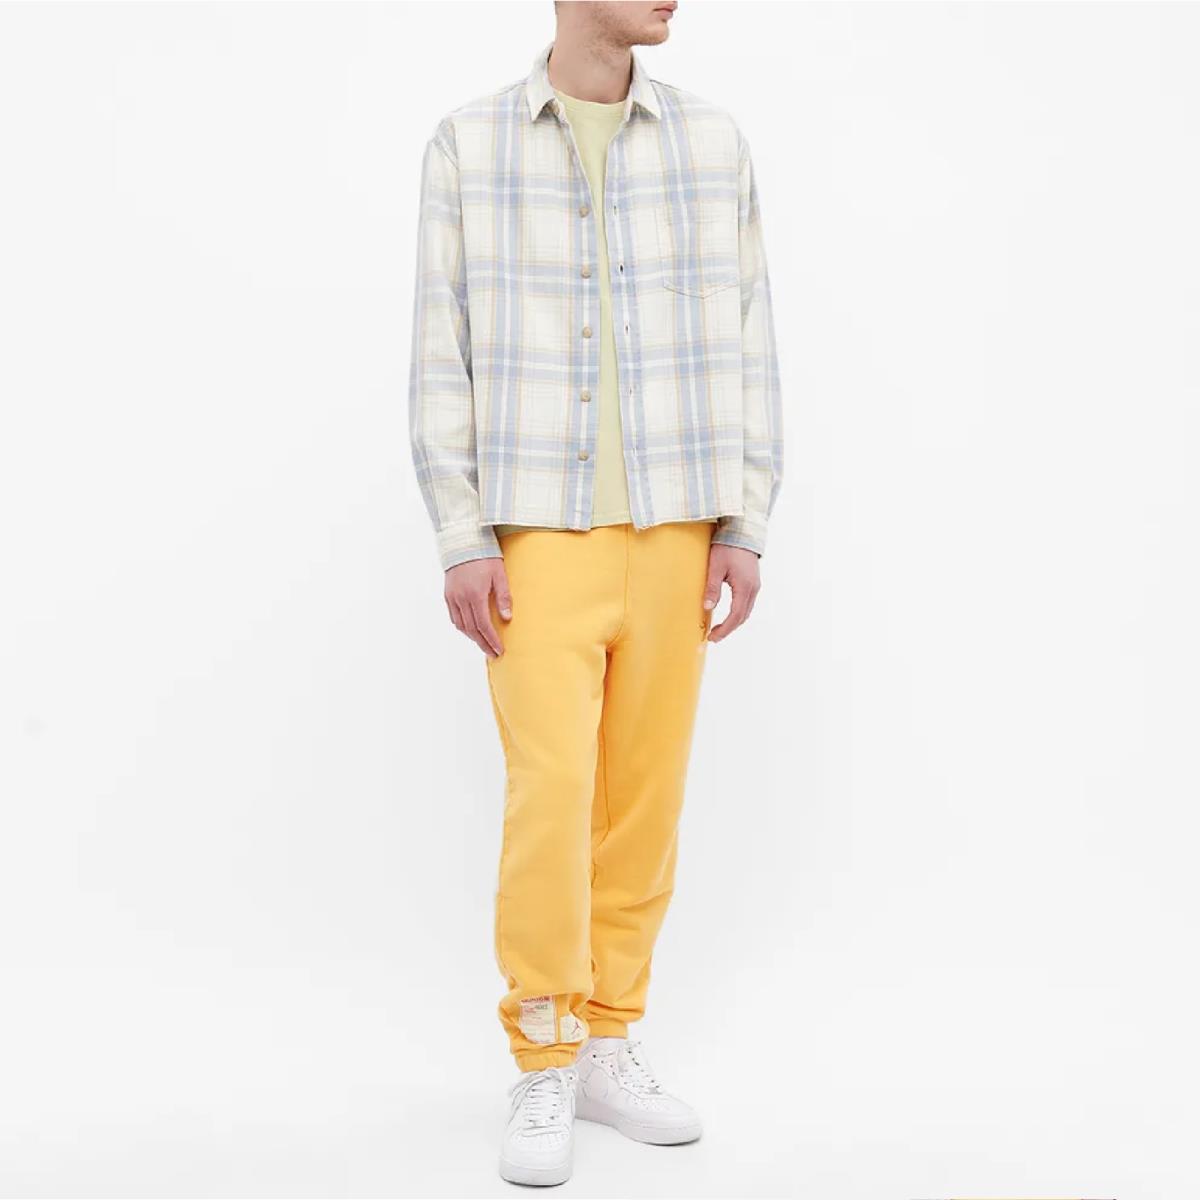 Nike clothing  - Yellow 2